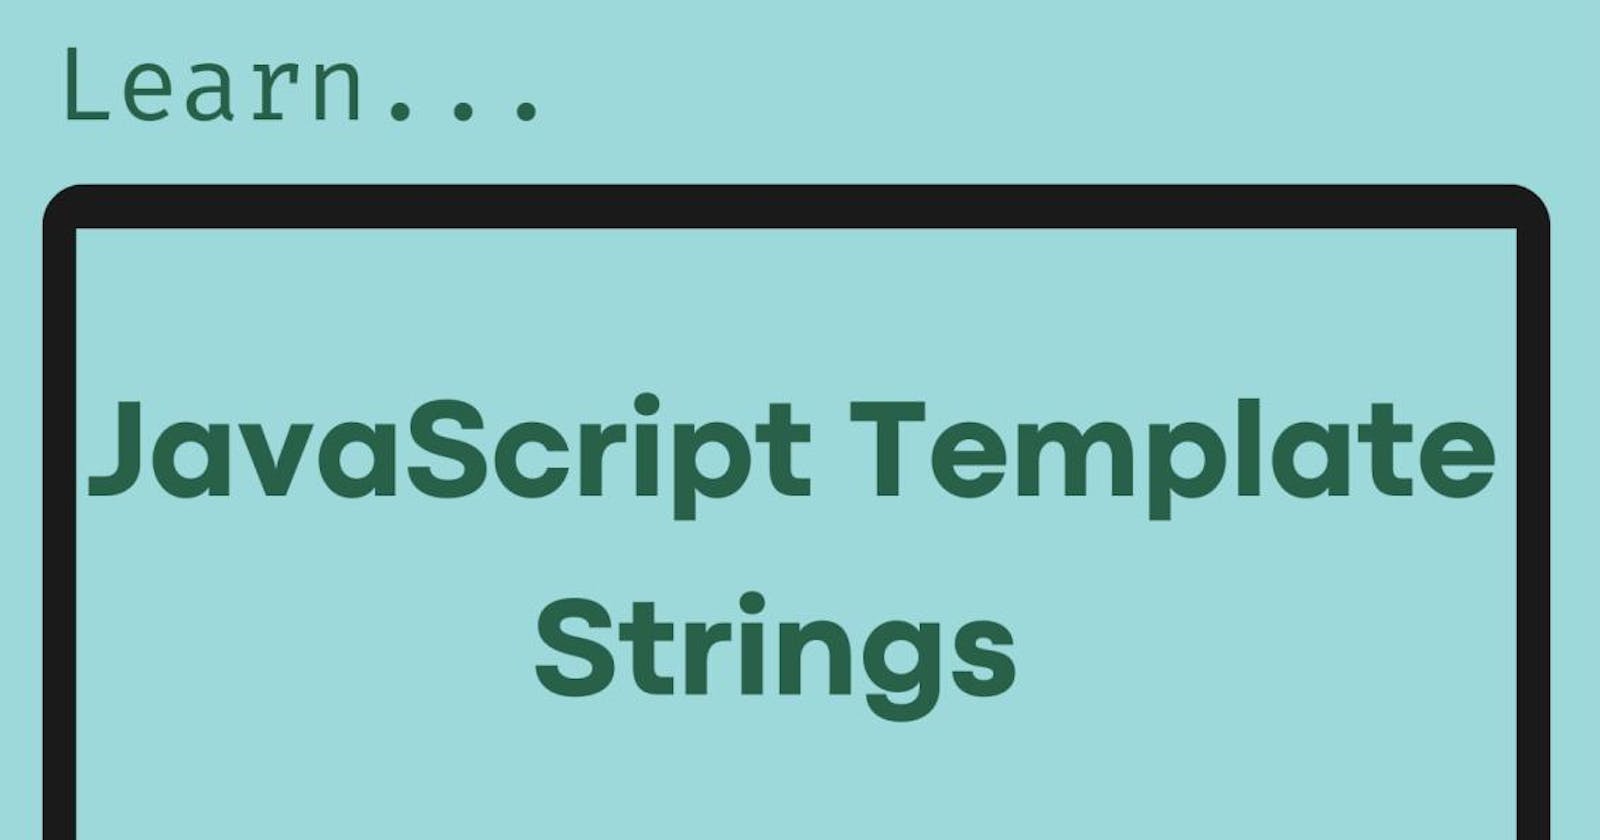 JavaScript Template String